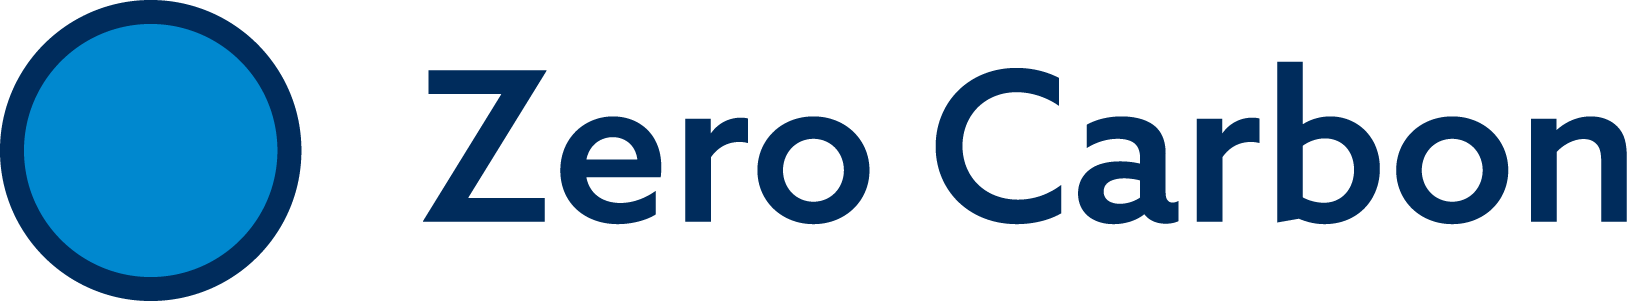 ZCC logo blue text